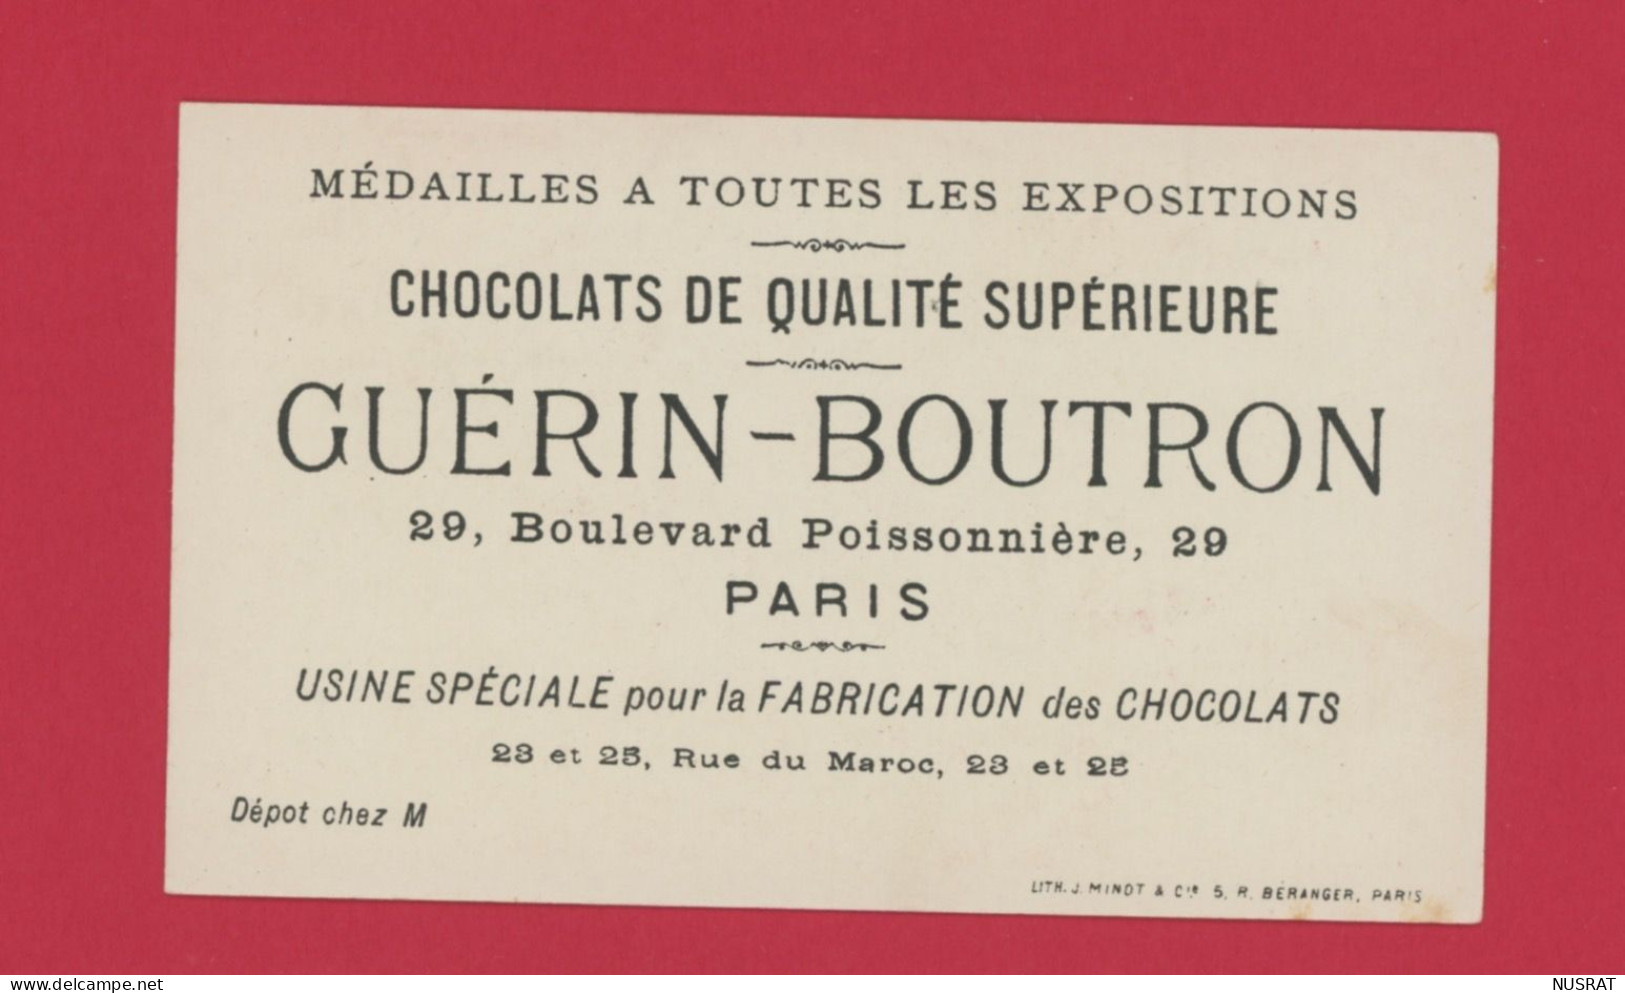 Chocolat Guérin Boutron, Jolie Chromo Lith. J. Minot, Marchande De Pommes De Terre Frites - Guerin Boutron